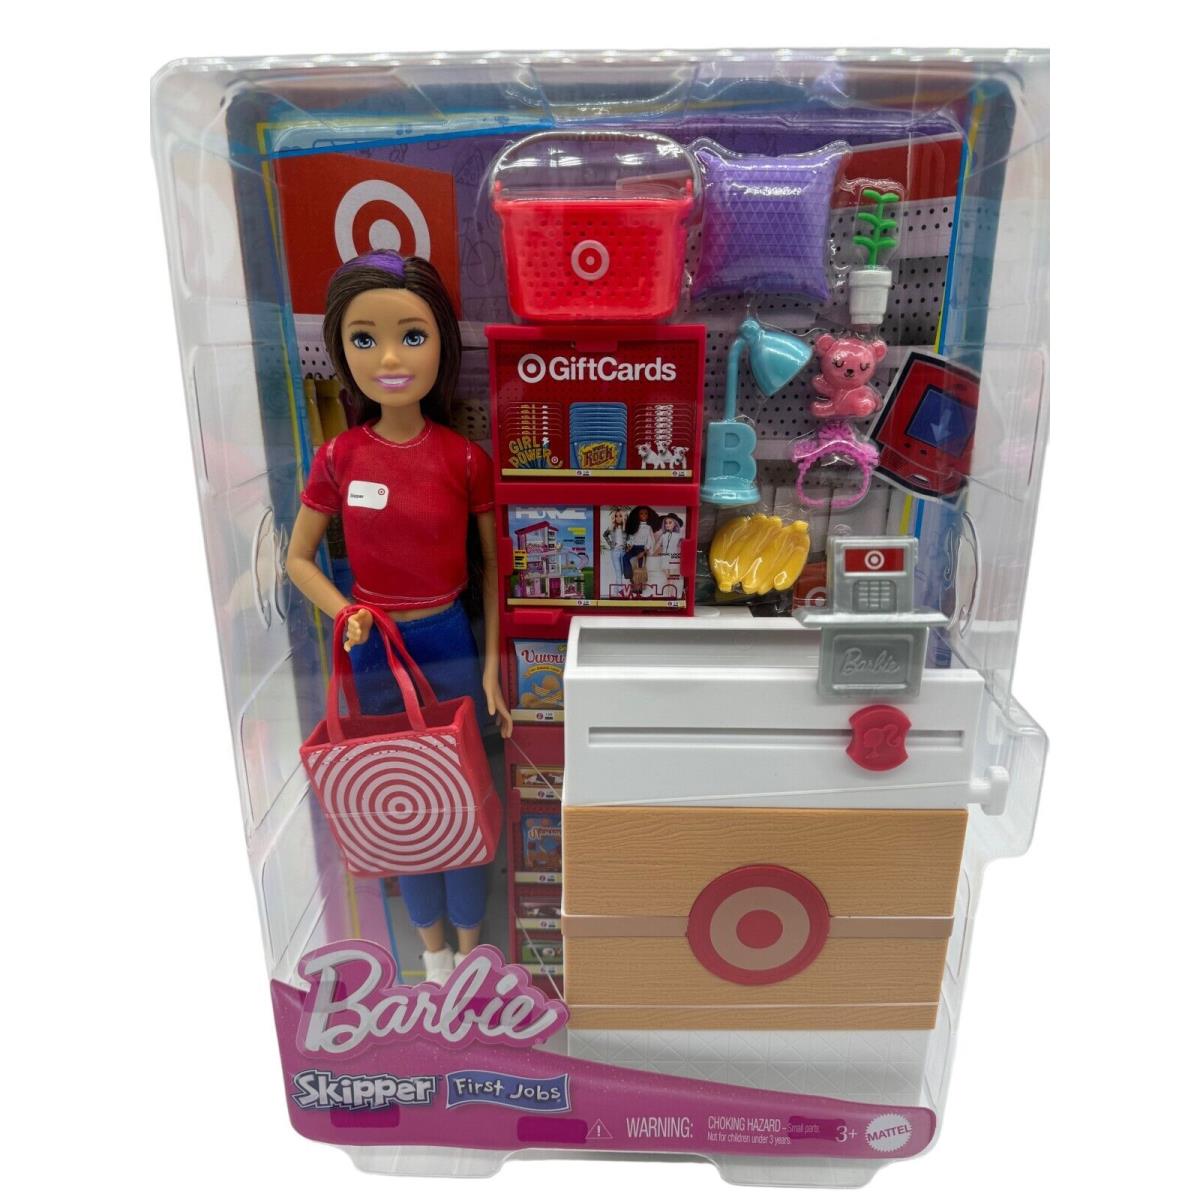 Barbie Skippers First Job Target Associate Doll Playset Target Exclusive HJY87